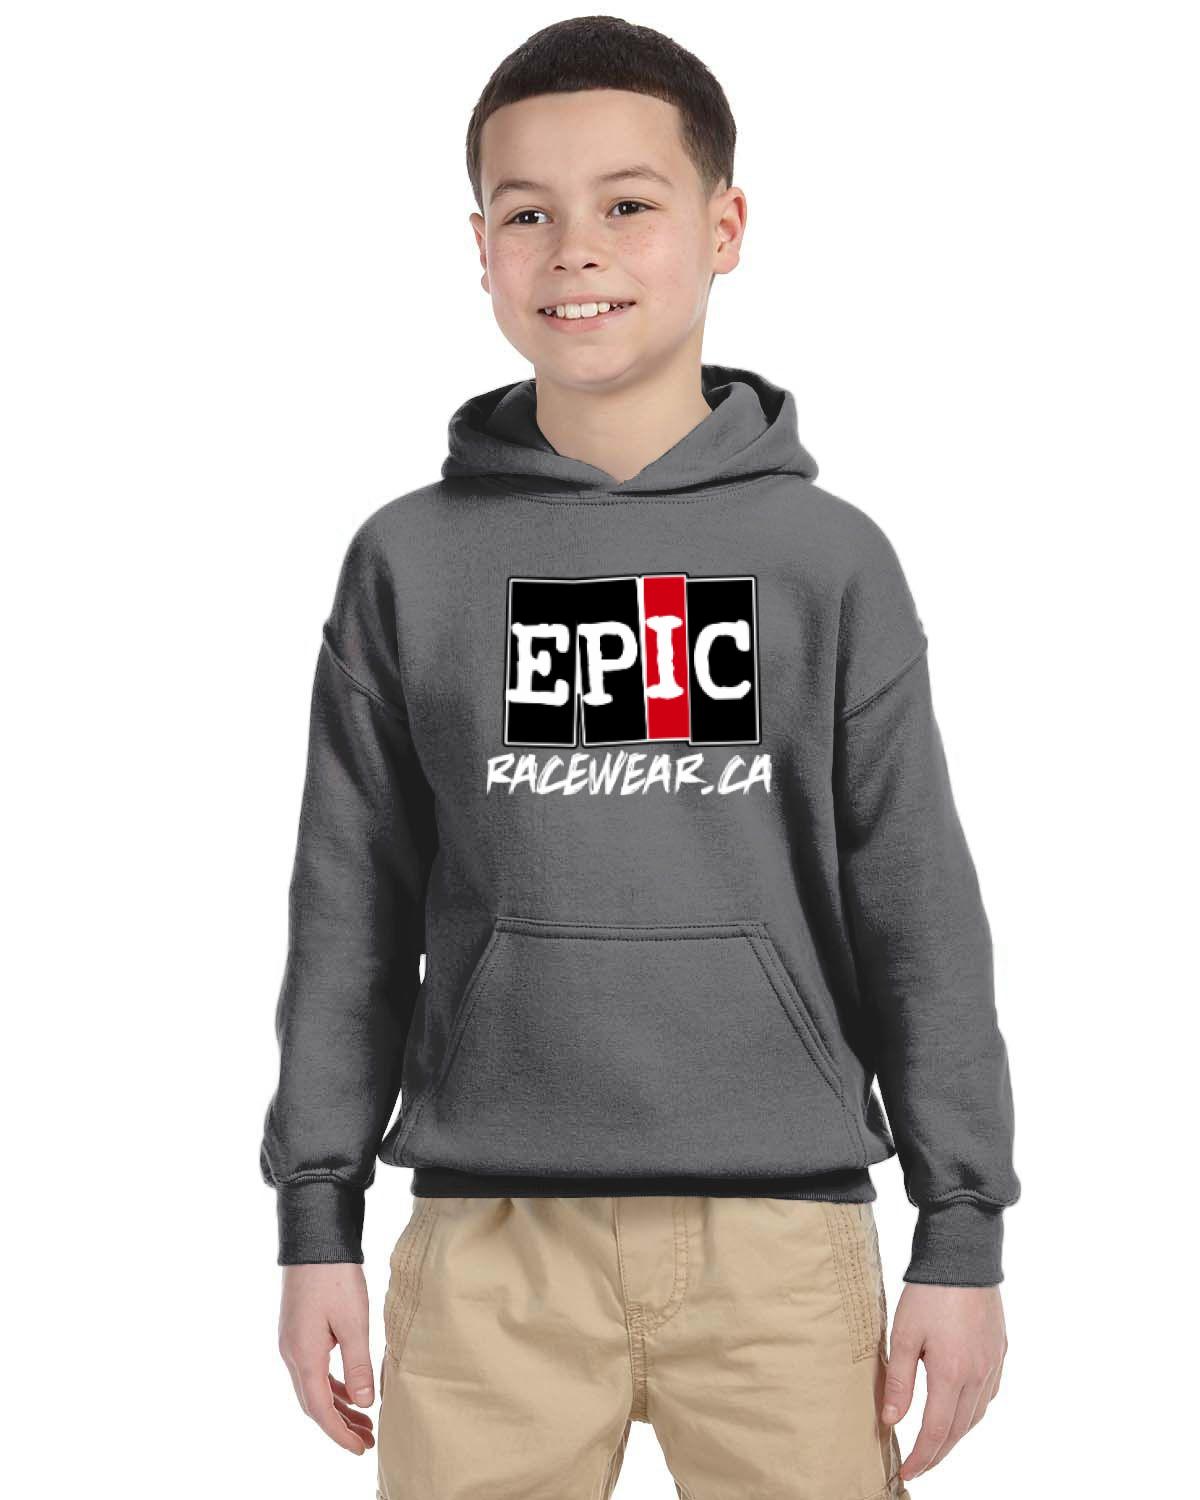 EPIC Racewear Youth Hoodie